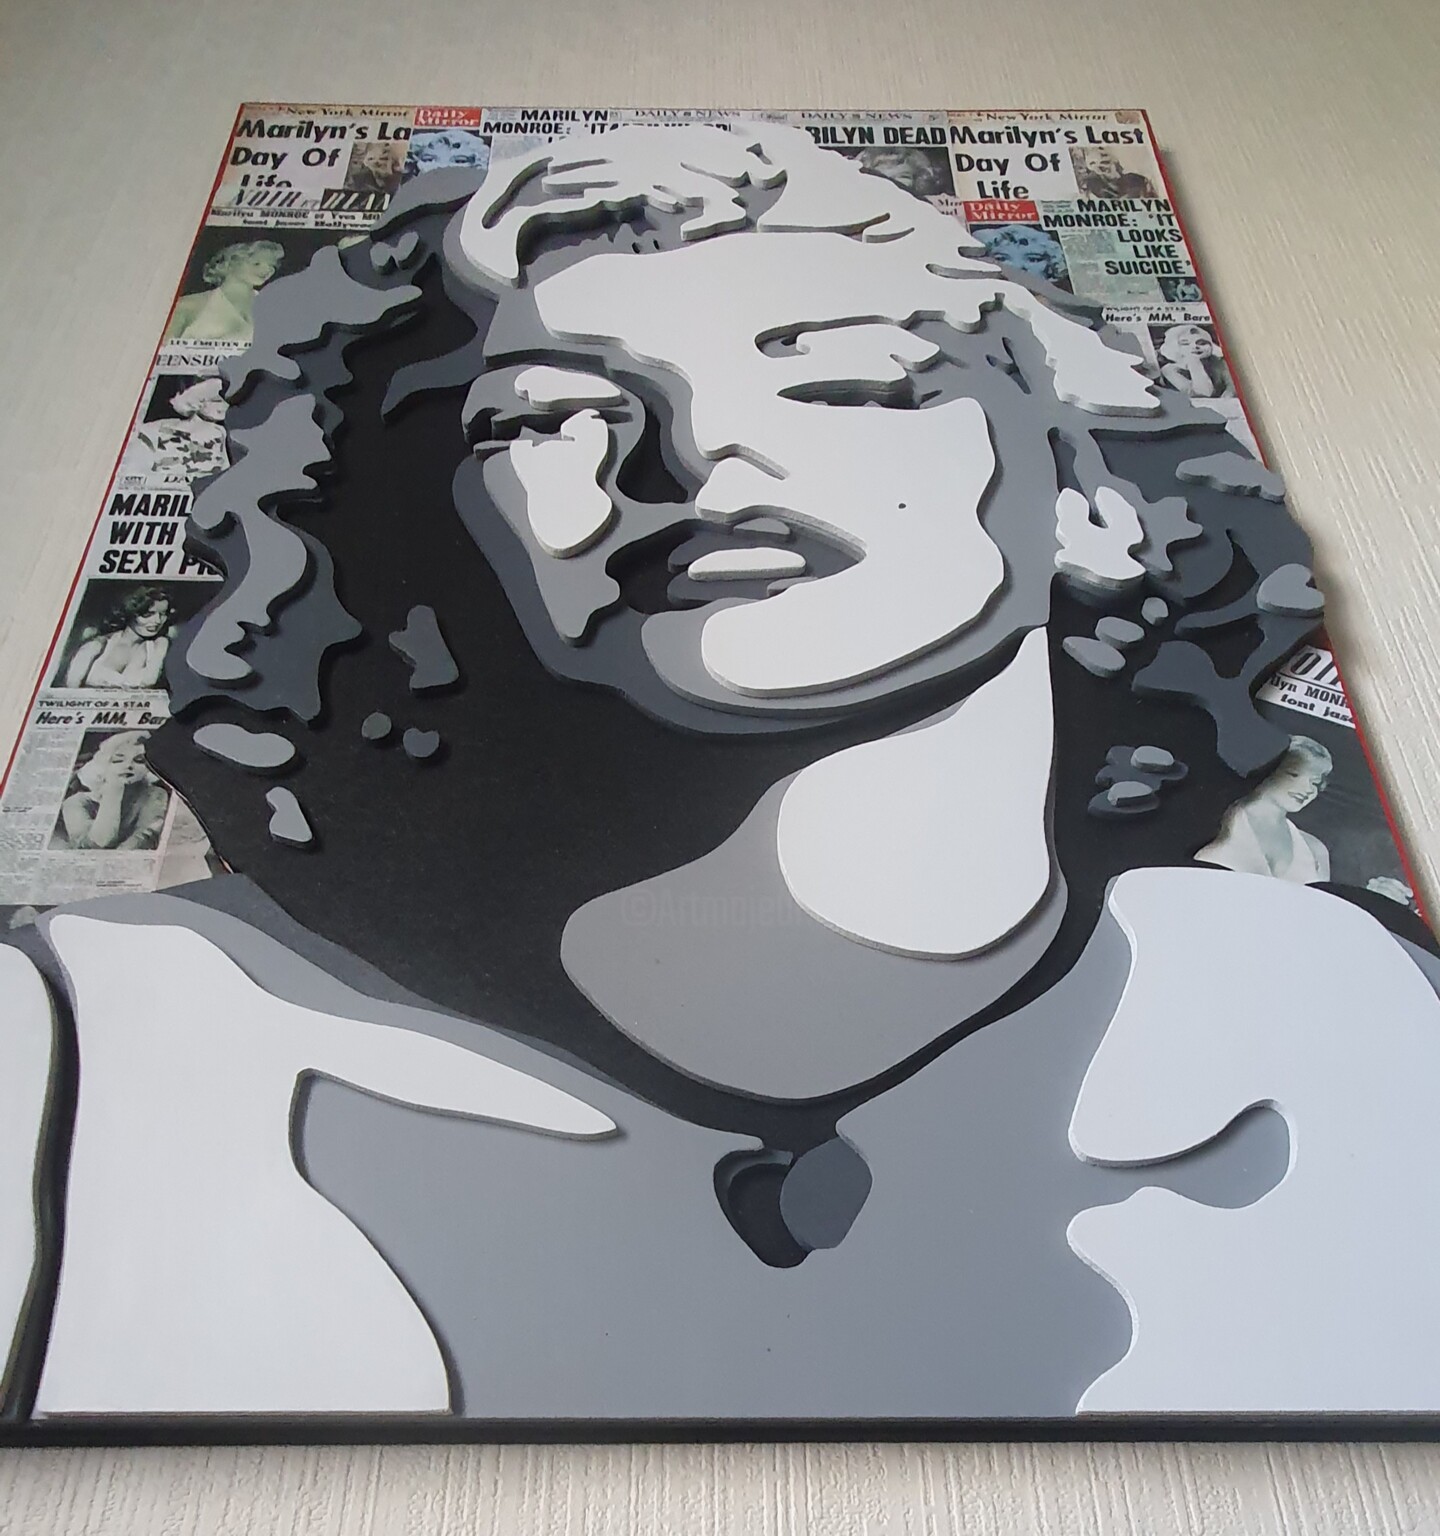 Marilyn Monroe - Tableau En Relief, Sculpture by Ludovic Latreille